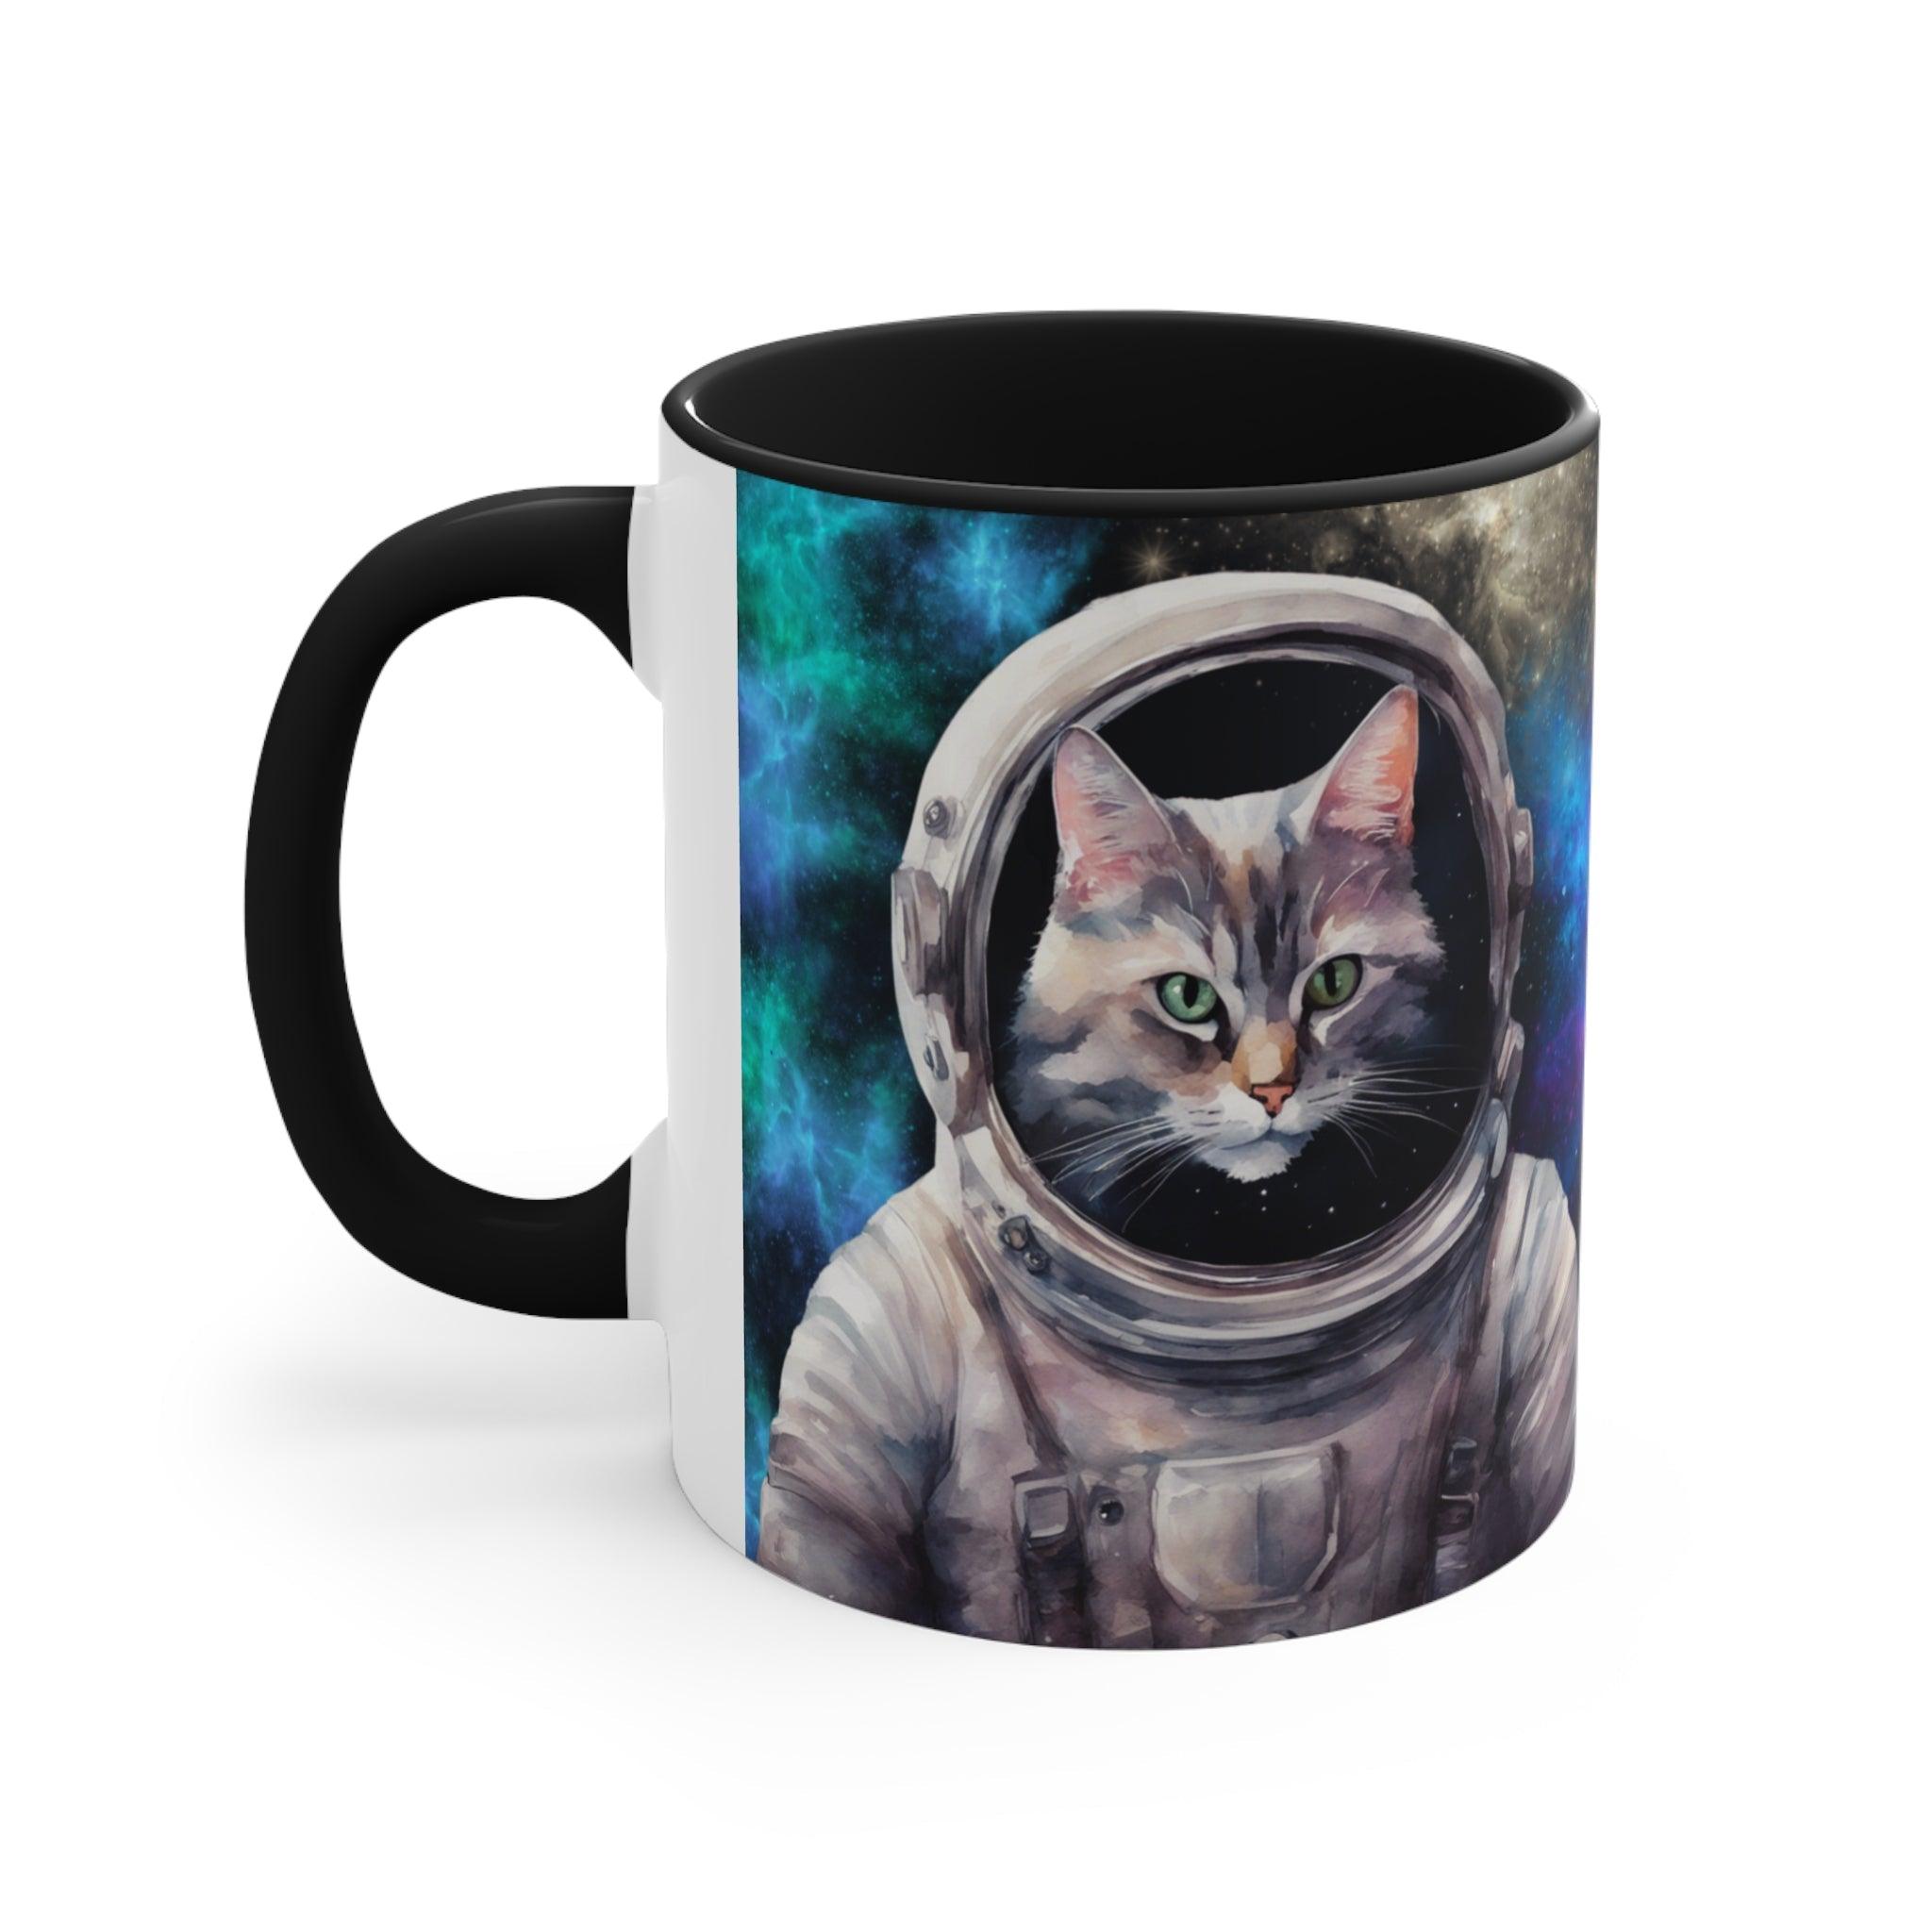 Mug "Reach for the Stars" - Cat Astronaut - Accent Coffee Mug, 11oz - Soulshinecreators - 11 oz